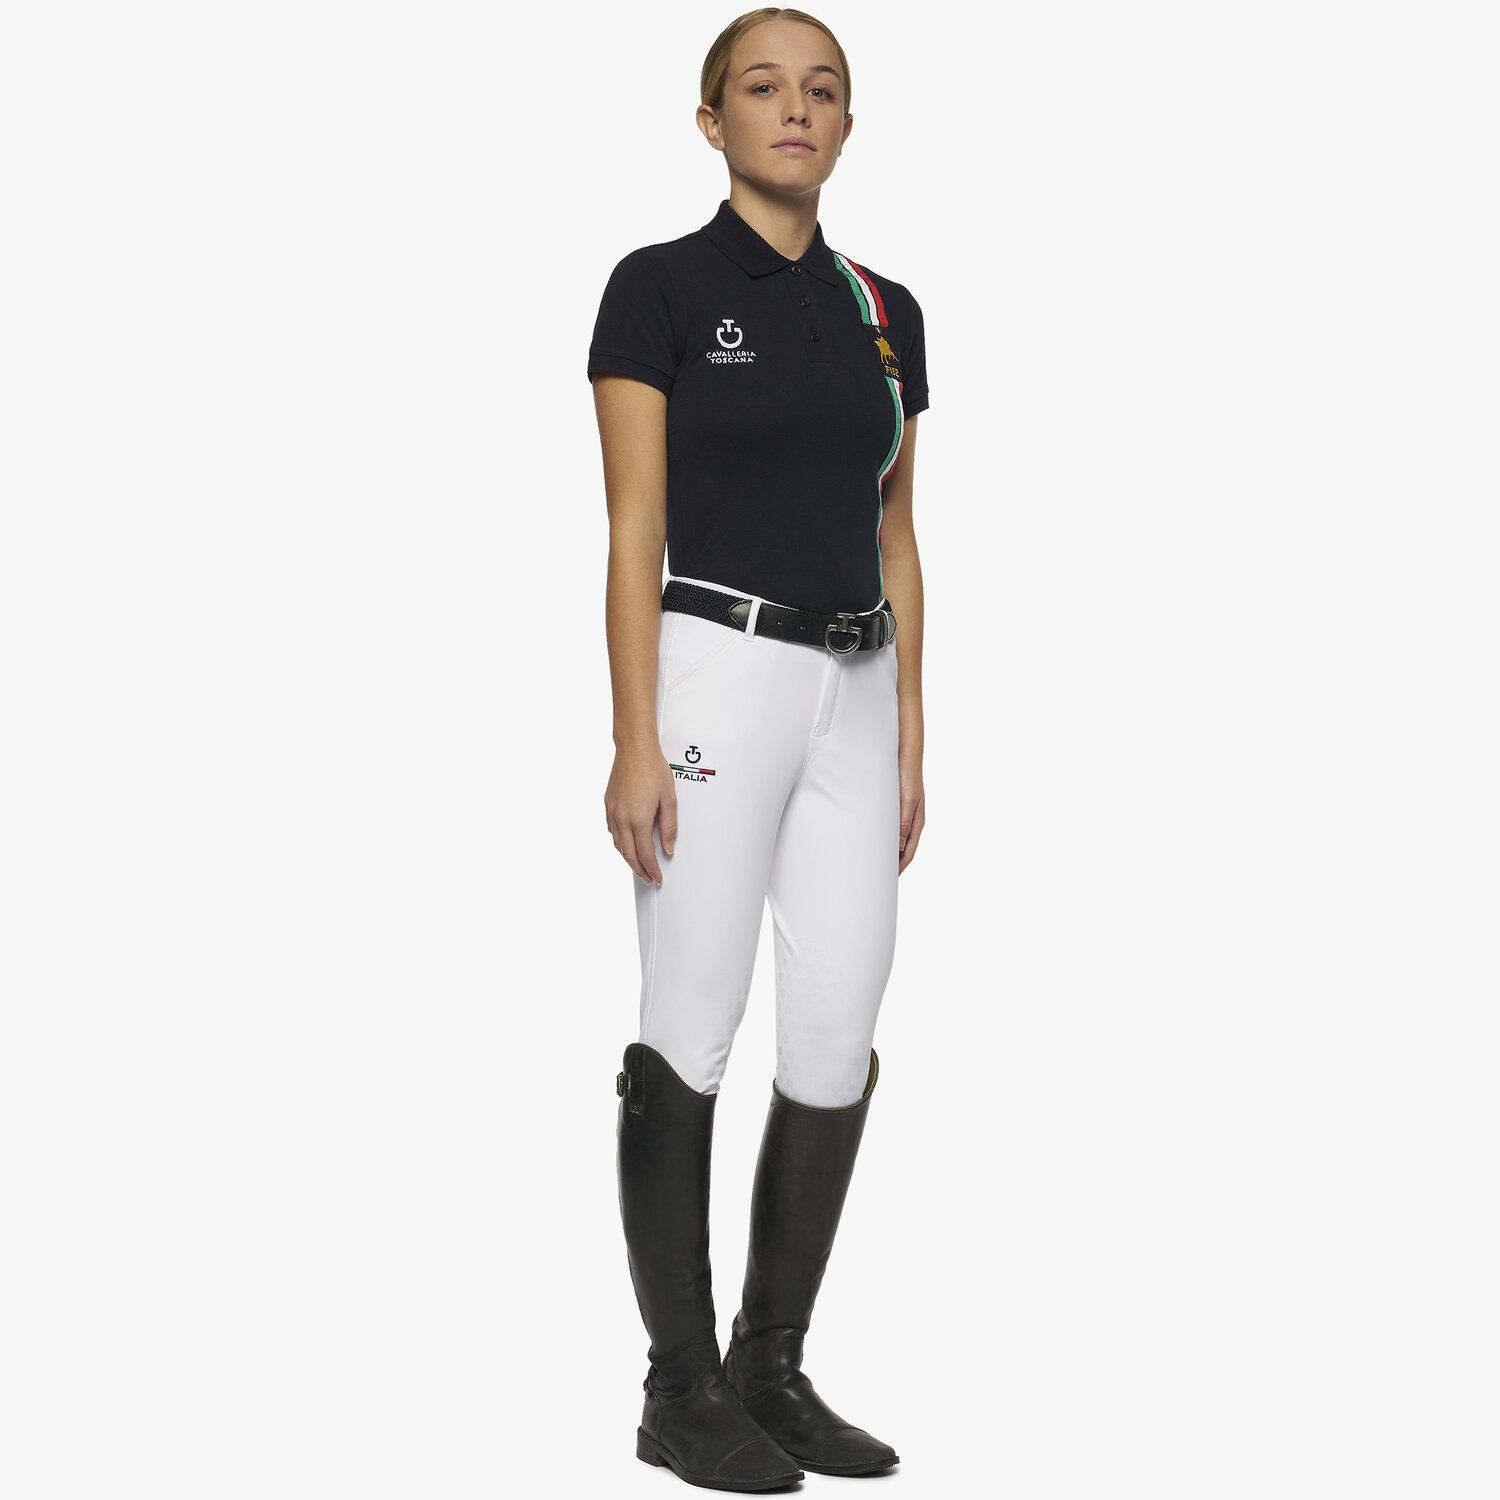 Cavalleria Toscana Girl's FISE polo with short sleeves. NAVY-2